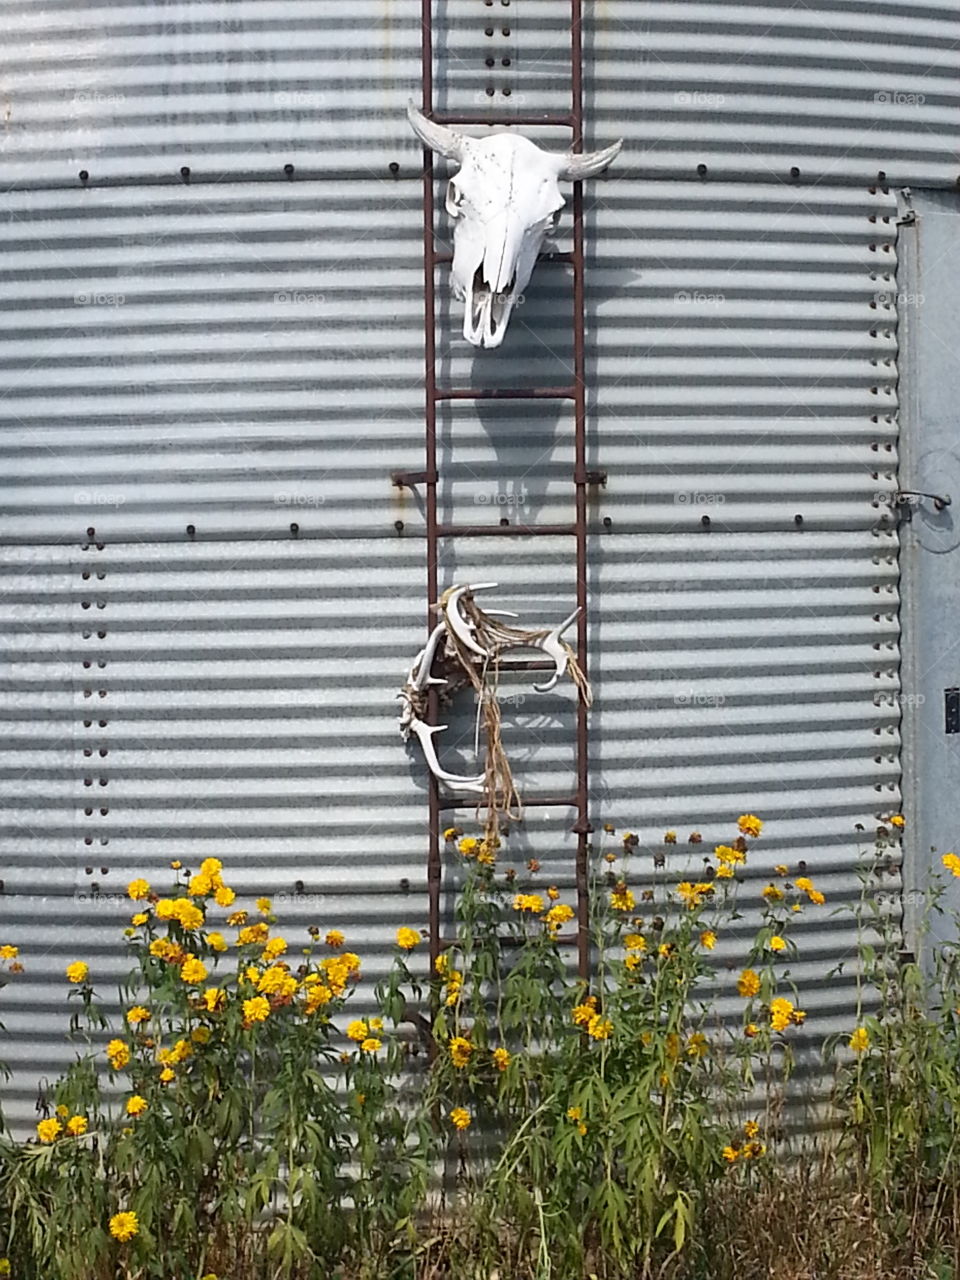 Contrast, metal, flowers,bone, sunny ladder